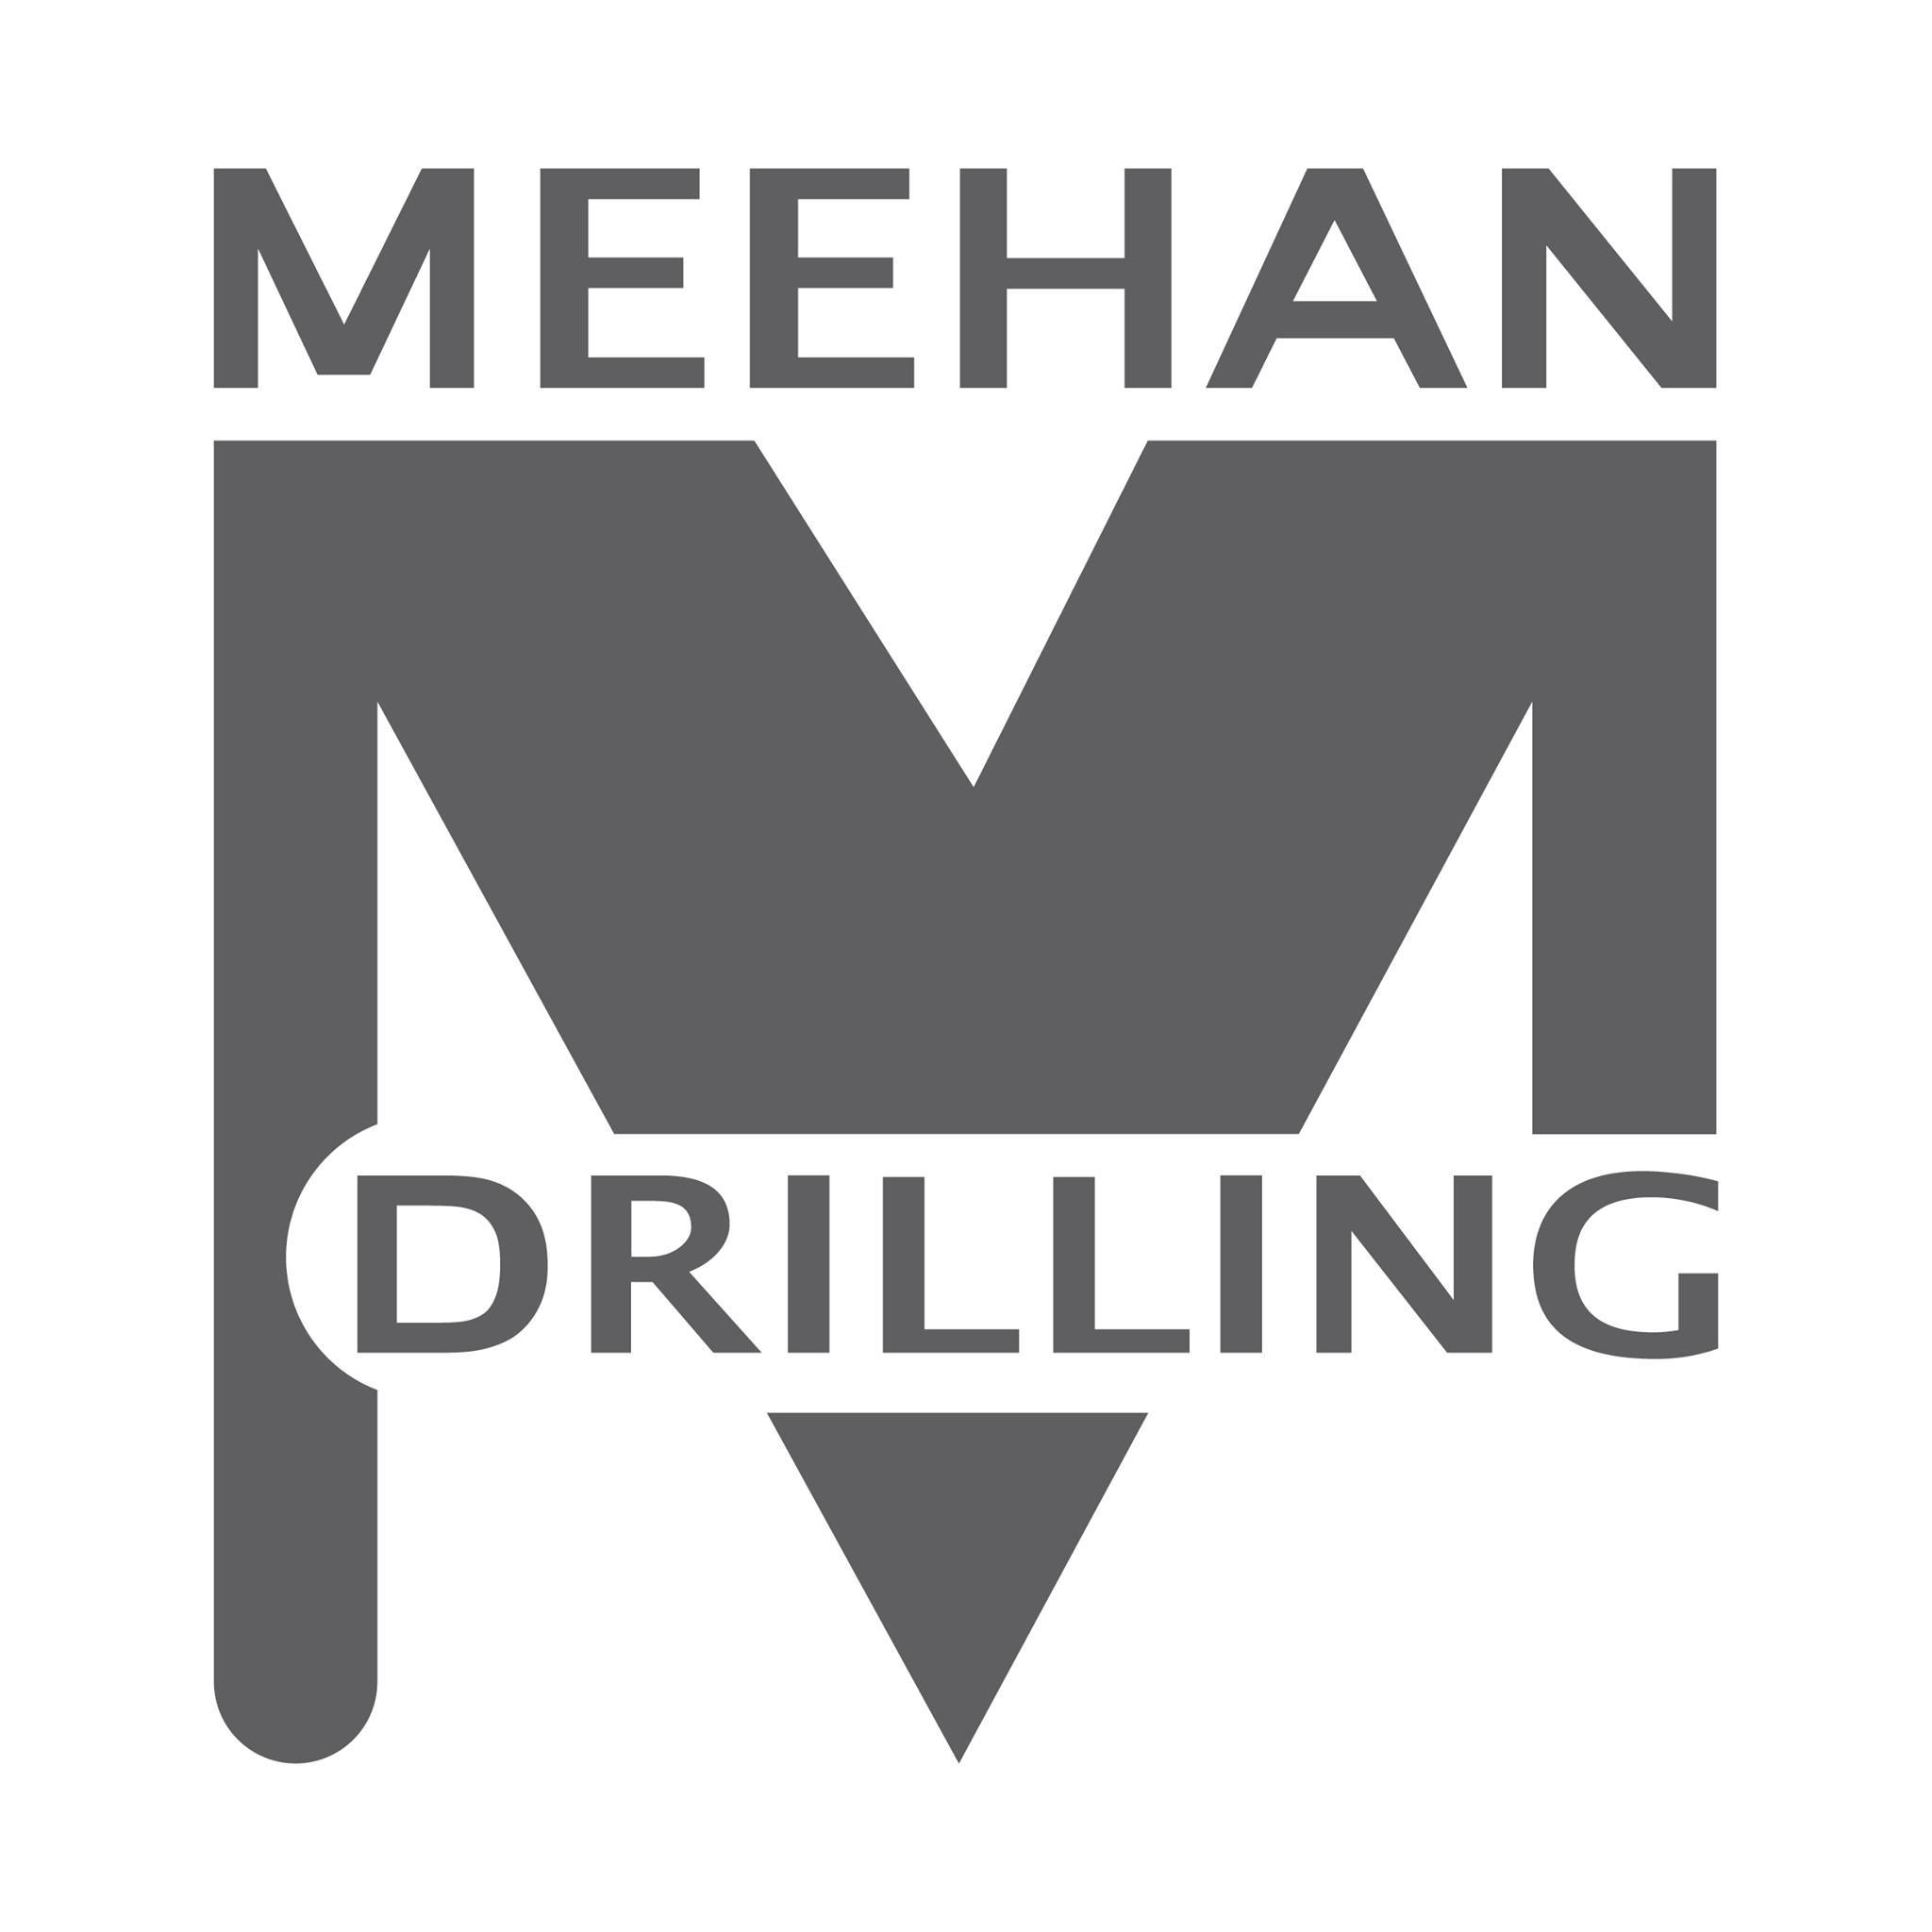 Meehan Drilling Ltd